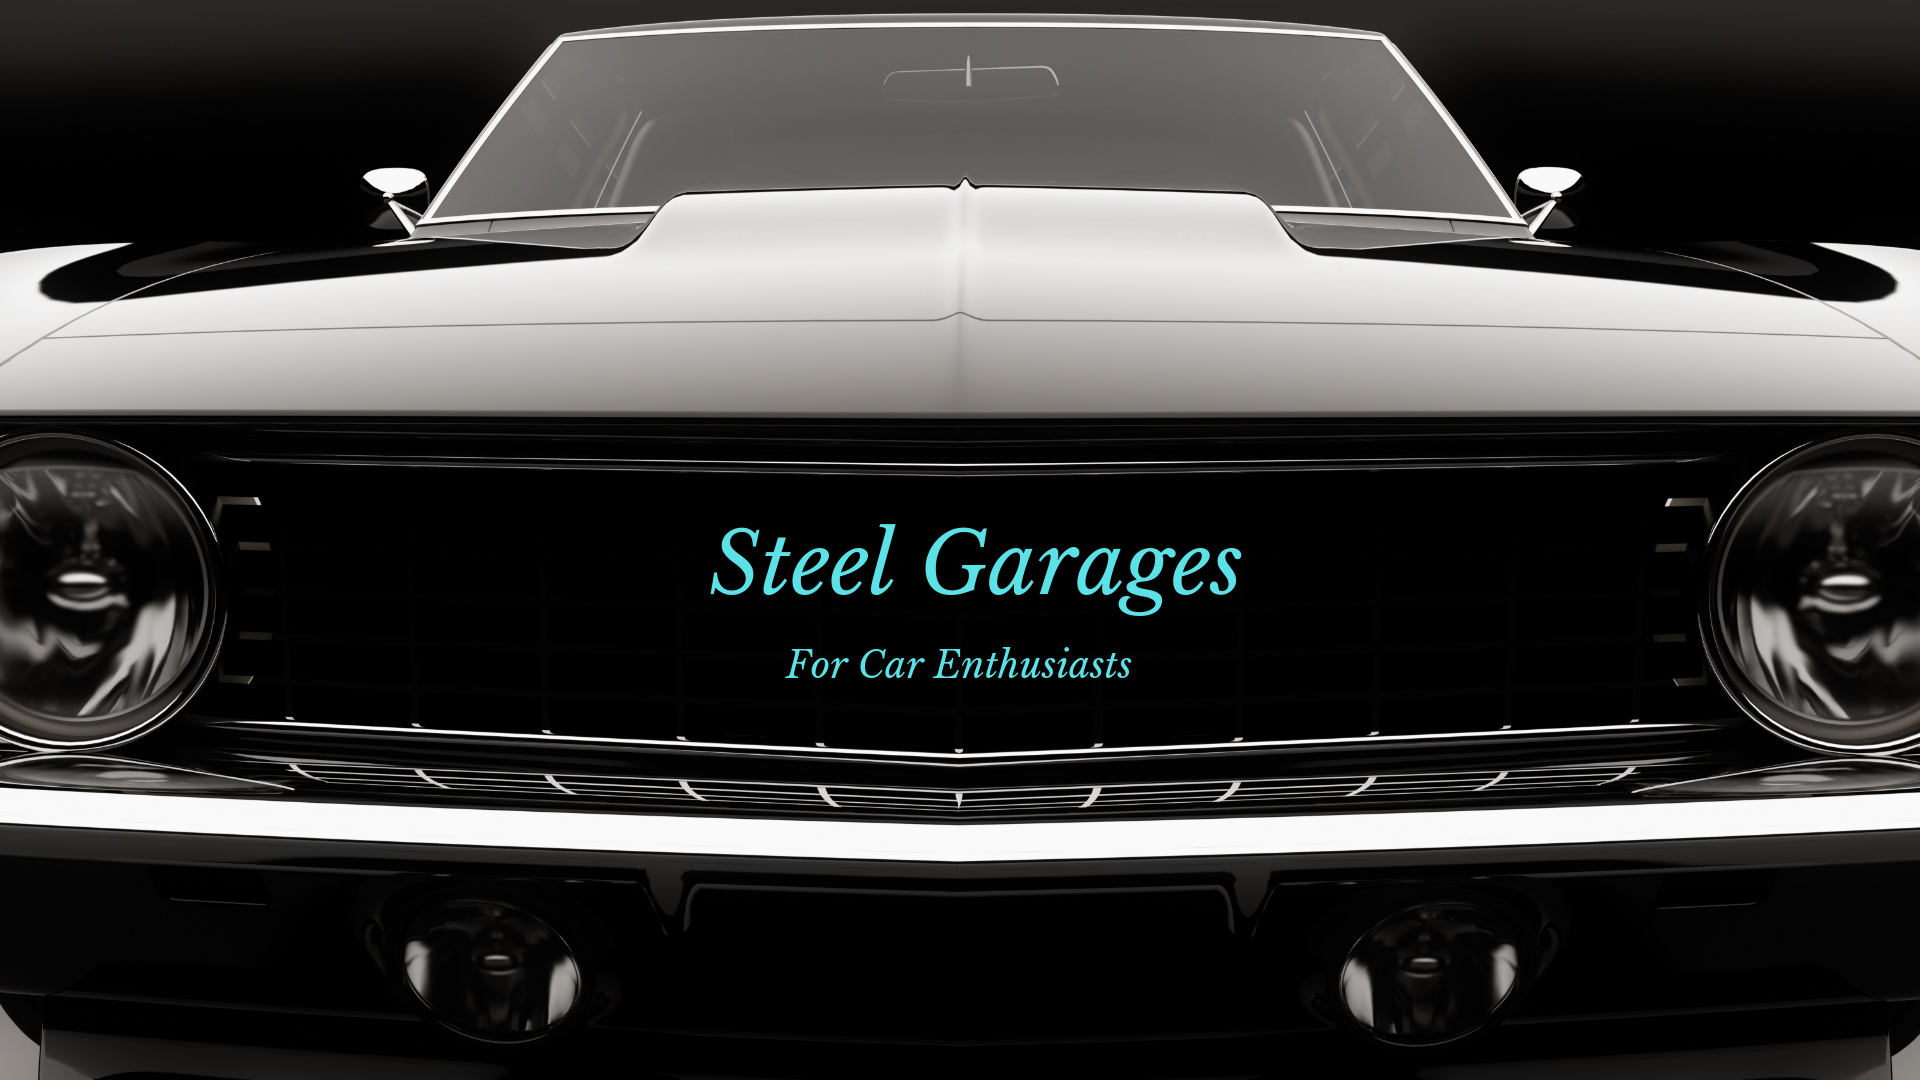 Why Car Enthusiasts Prefer A Prefabricated Steel Garage?